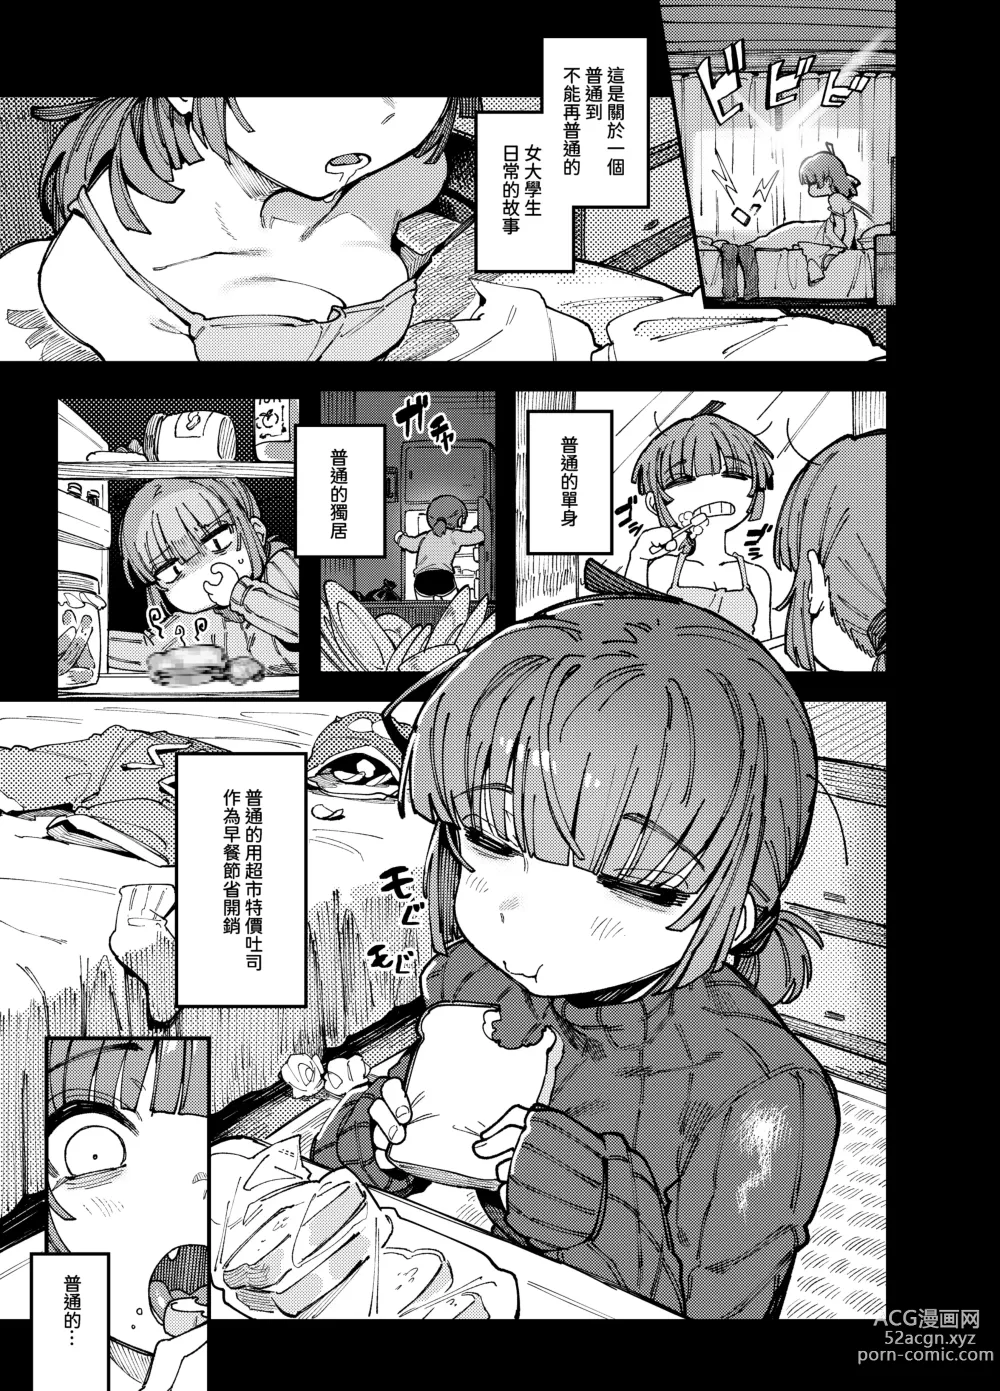 Page 2 of doujinshi 家裡過於潮濕長出致幻蘑菇意外誤食後發情的那些事